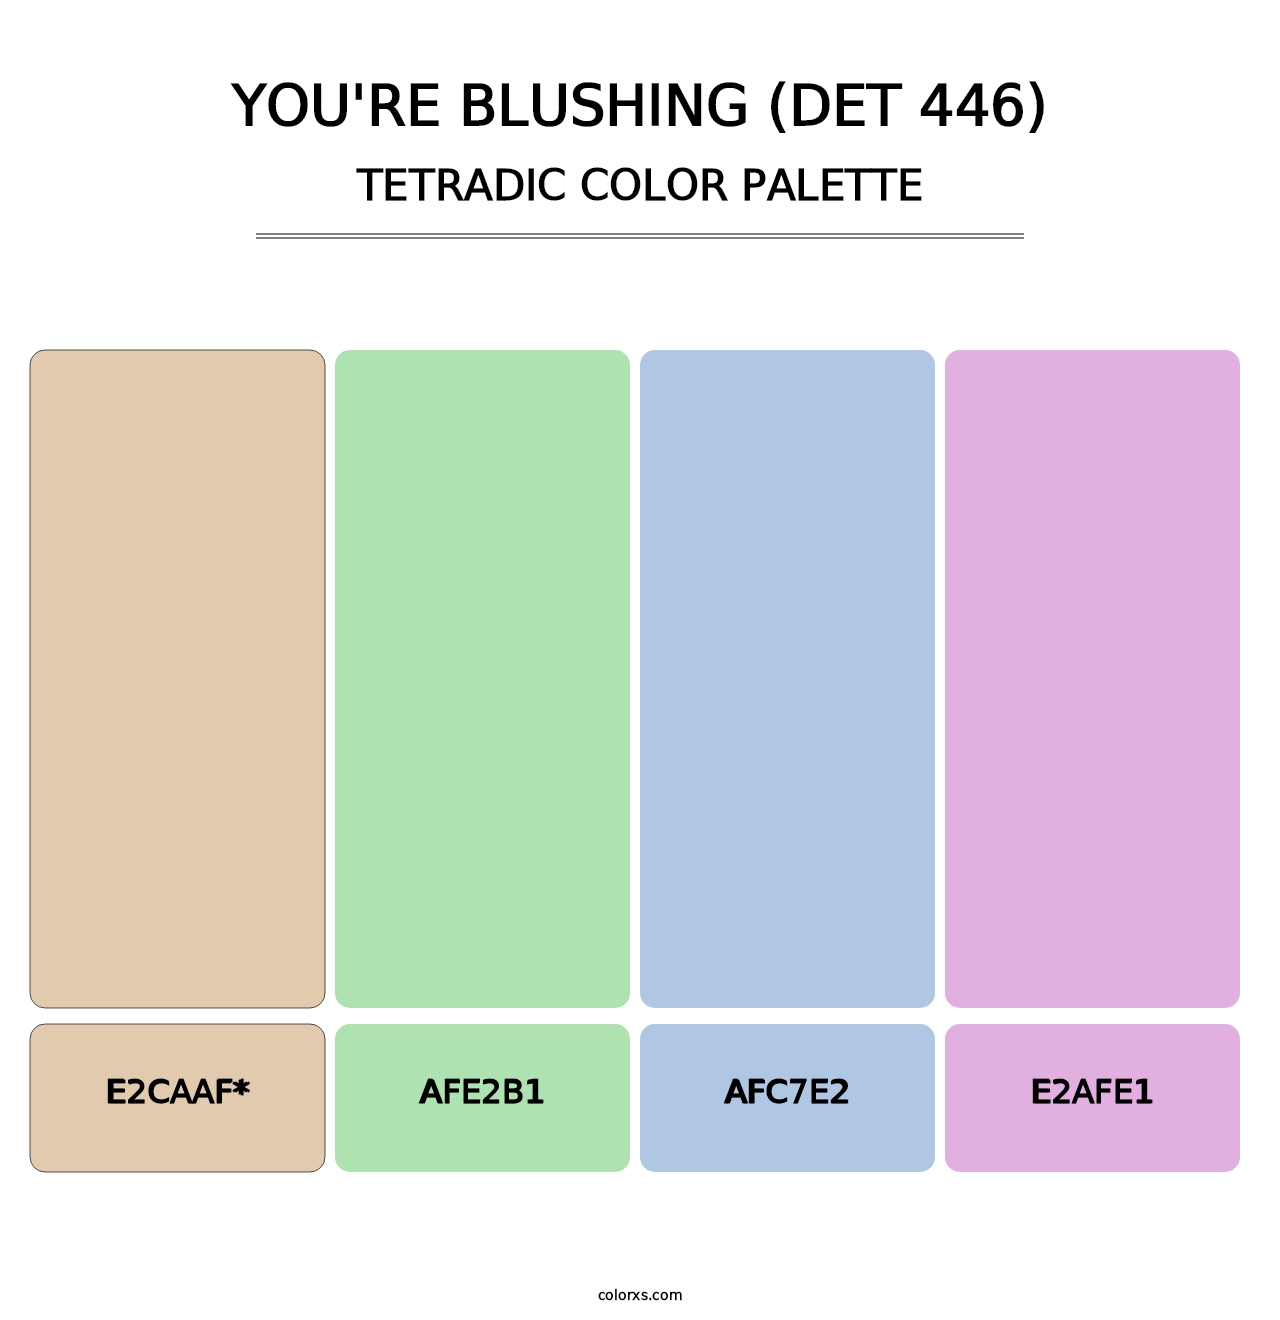 You're Blushing (DET 446) - Tetradic Color Palette